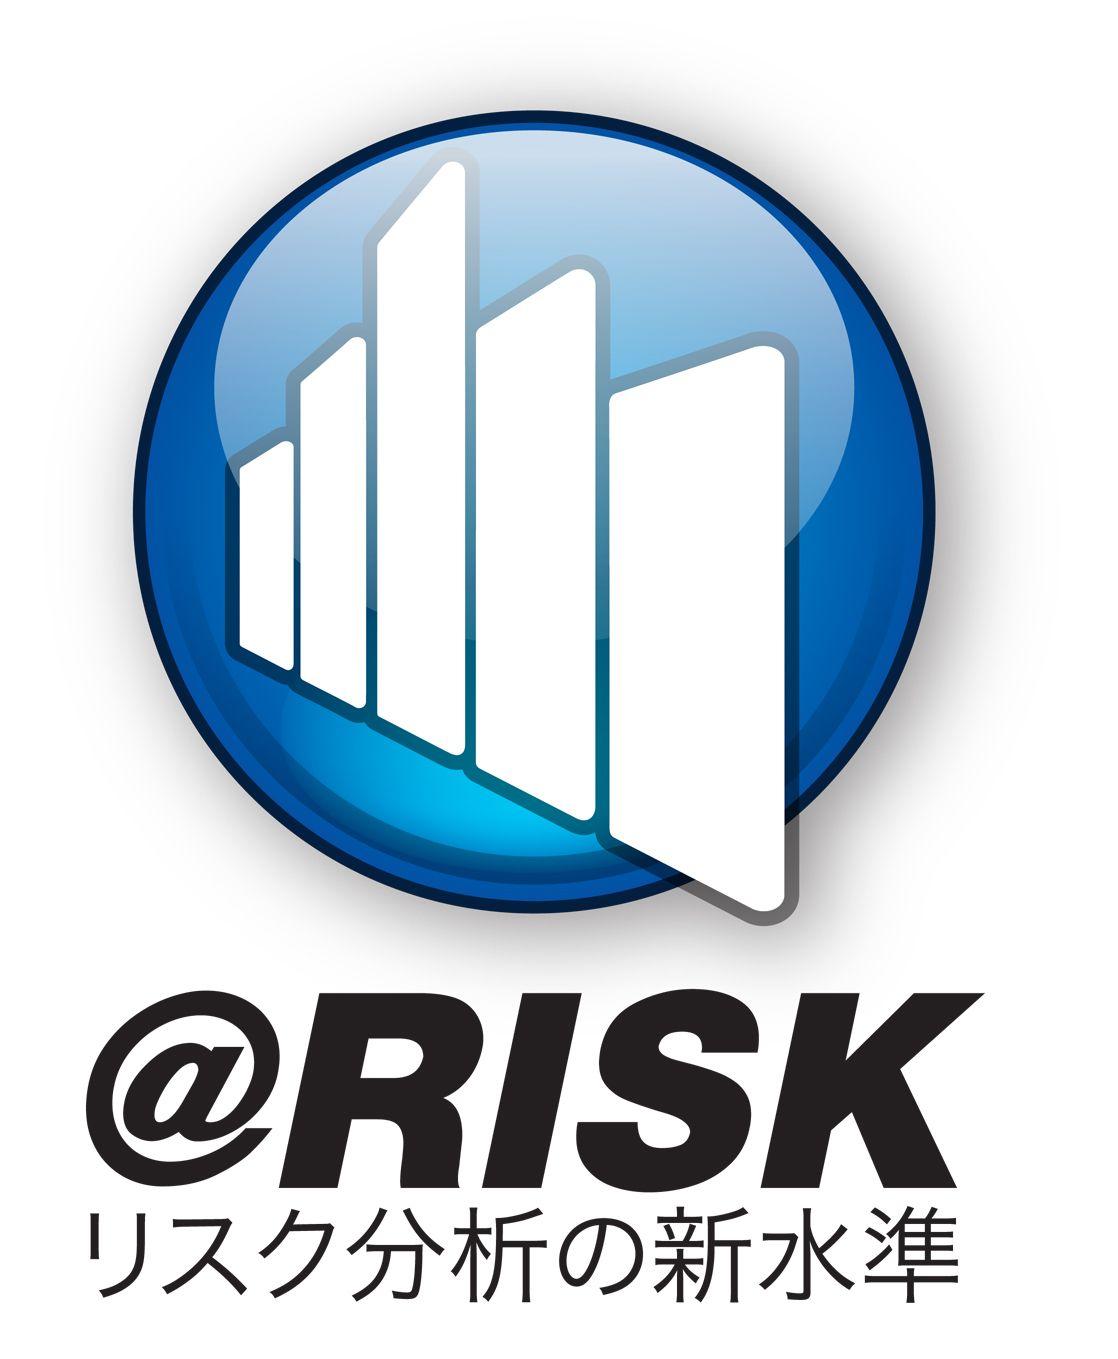 Risk Logo - Image Gallery, Risk Analysis, Decision Analysis, Monte Carlo ...